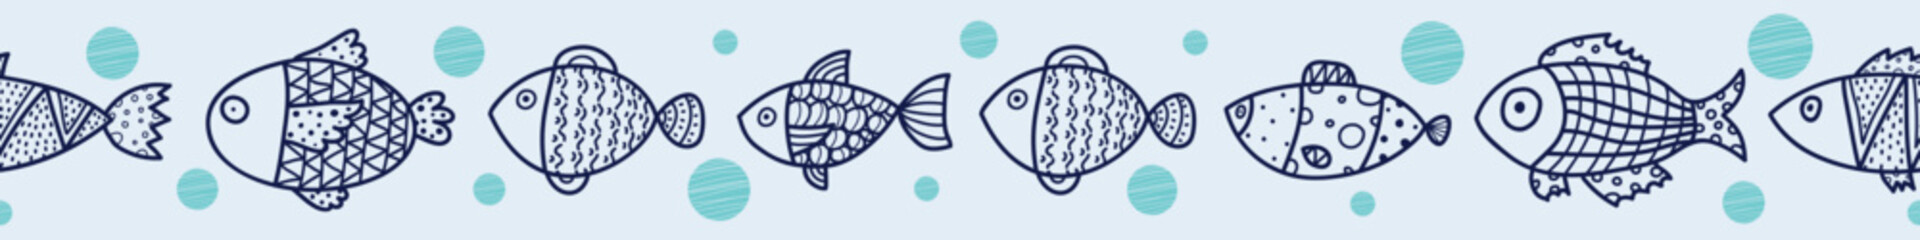 Vector seamless horizontal border with line fish. Cute illustration. - 780759359